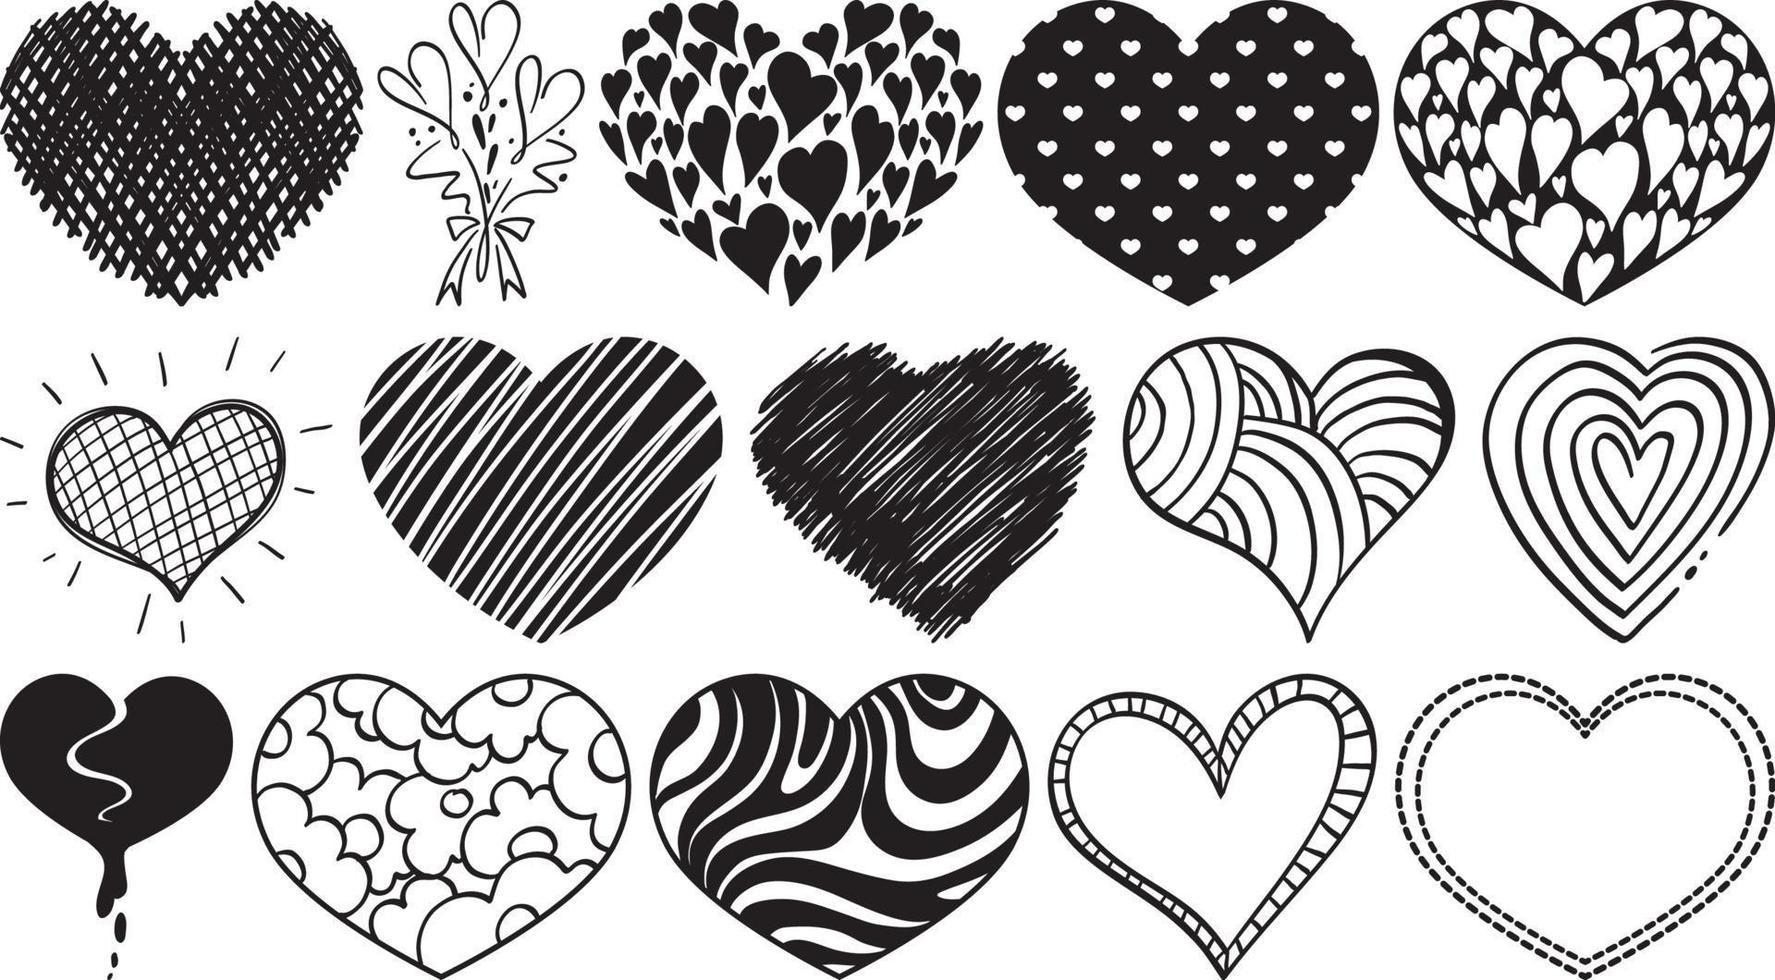 Black hand drawn hearts set vector